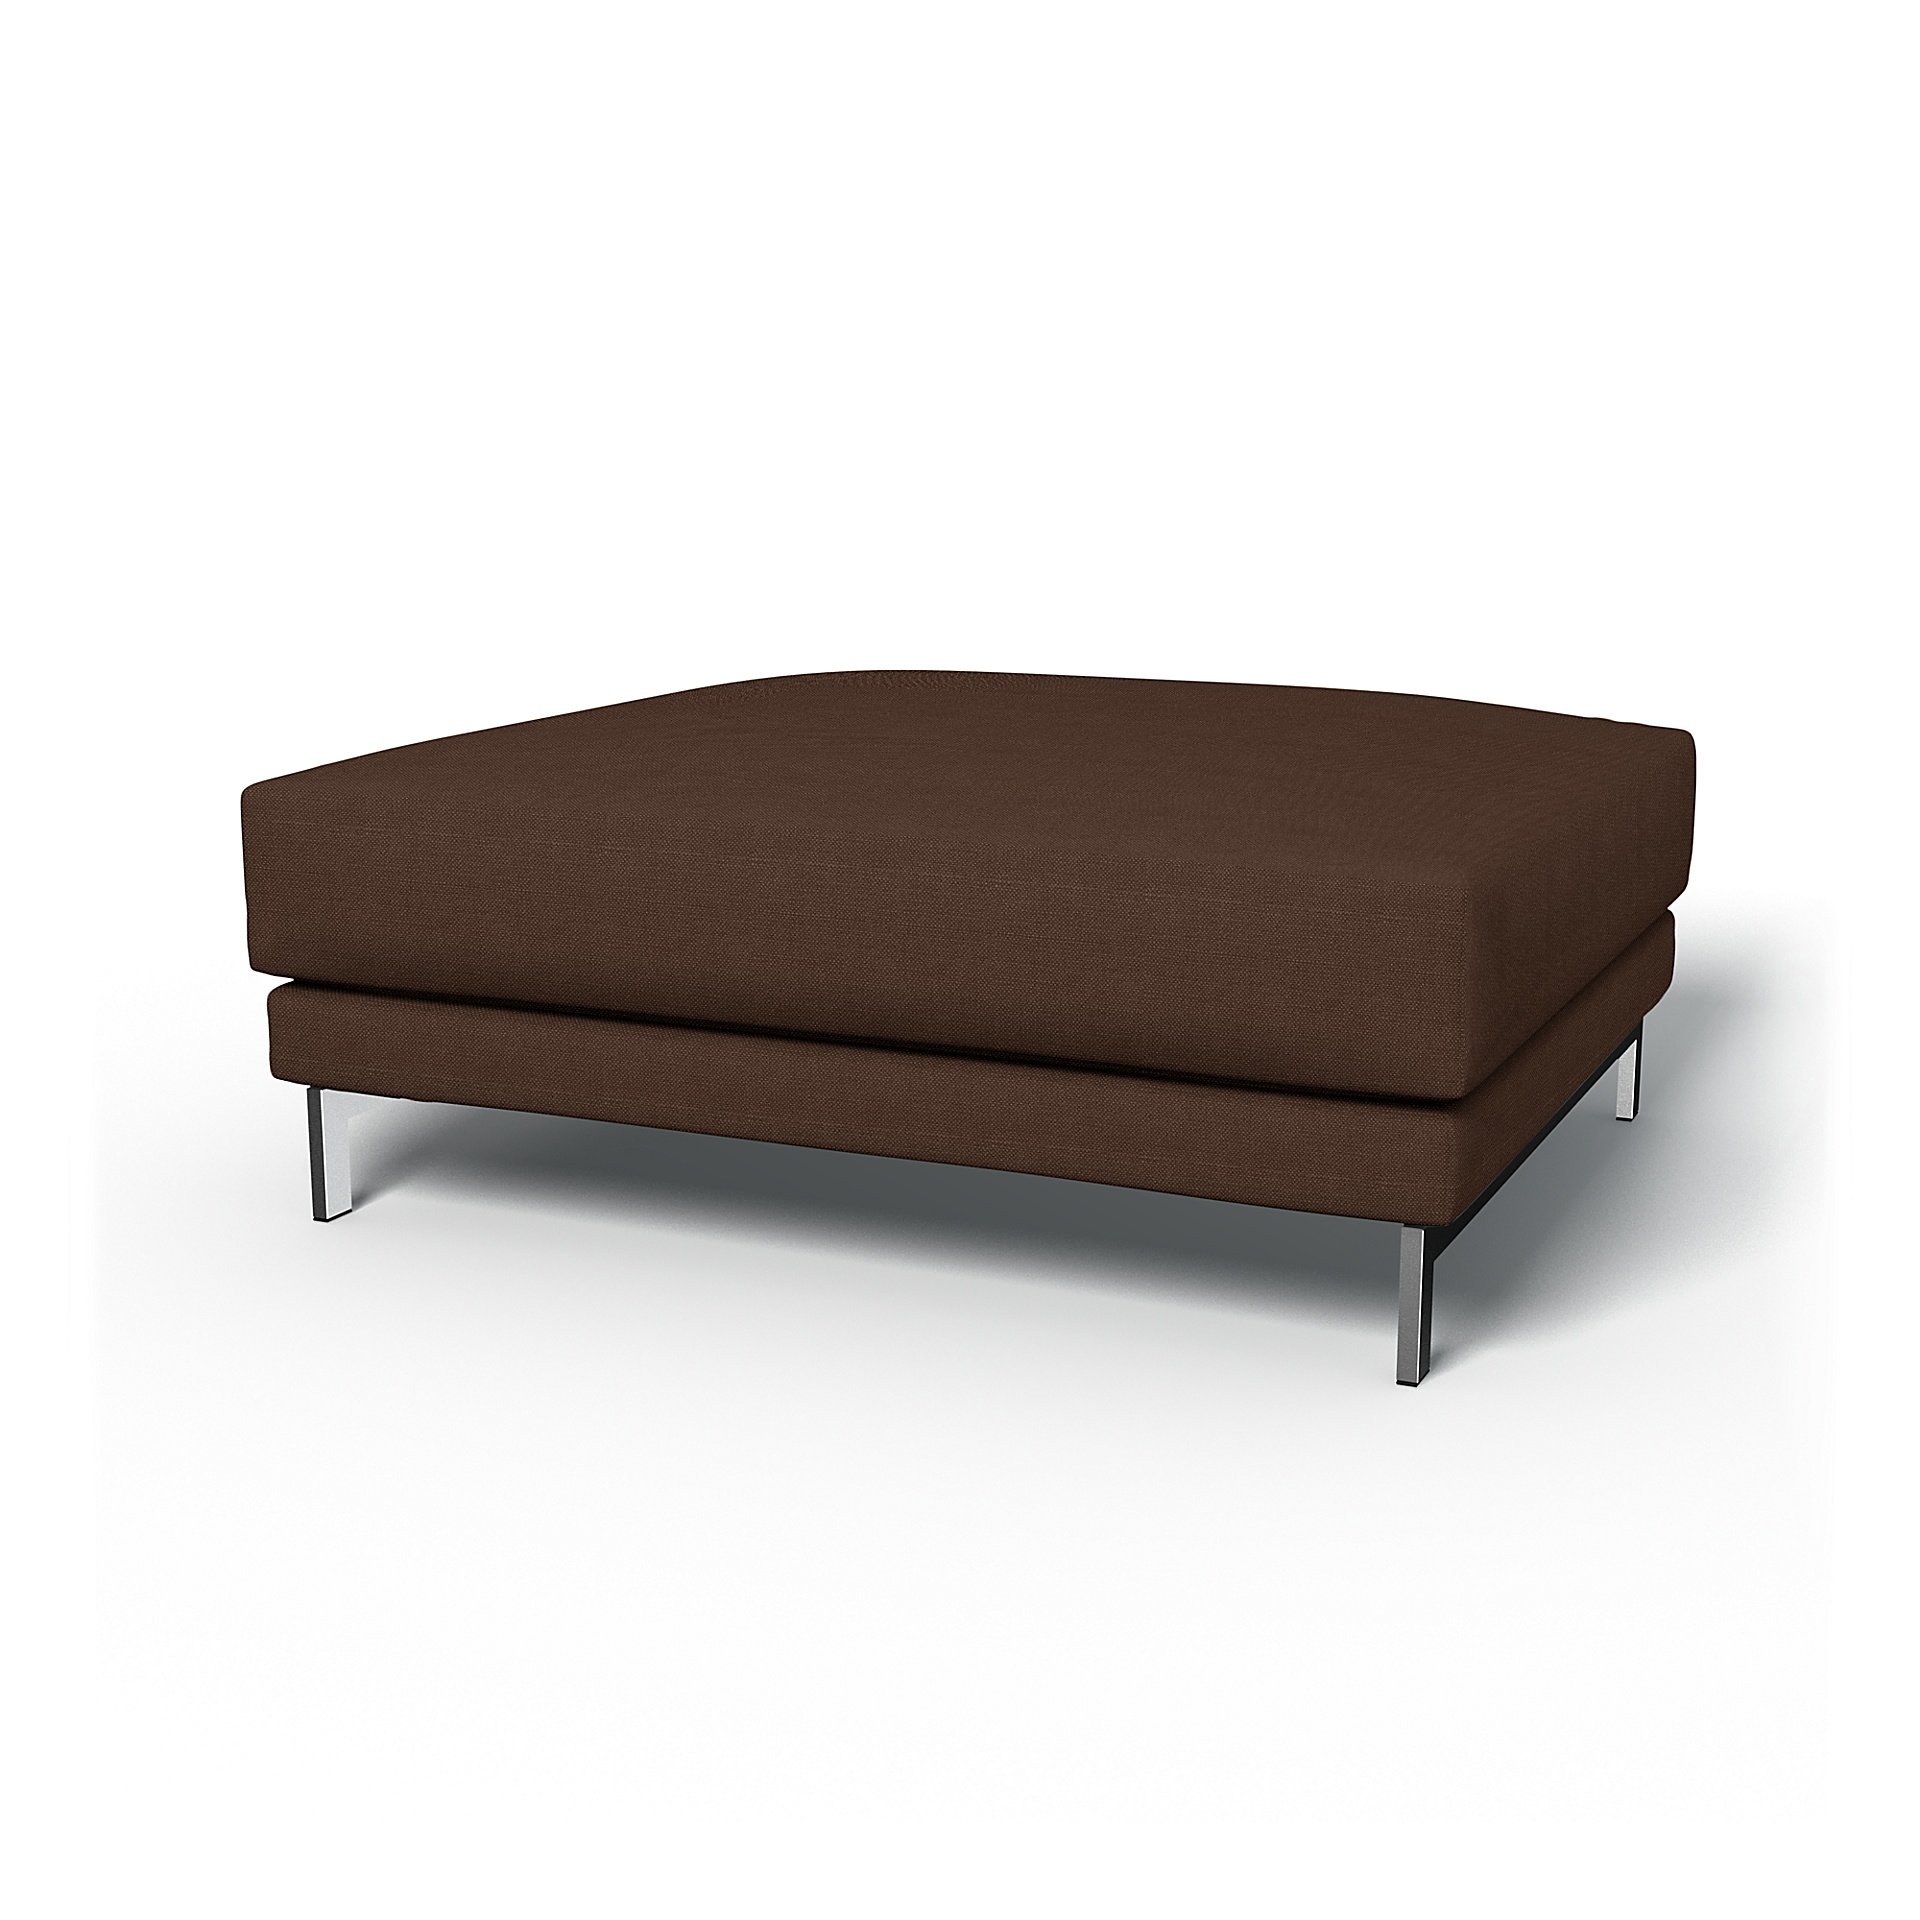 IKEA - Nockeby Footstool Cover, Chocolate, Linen - Bemz